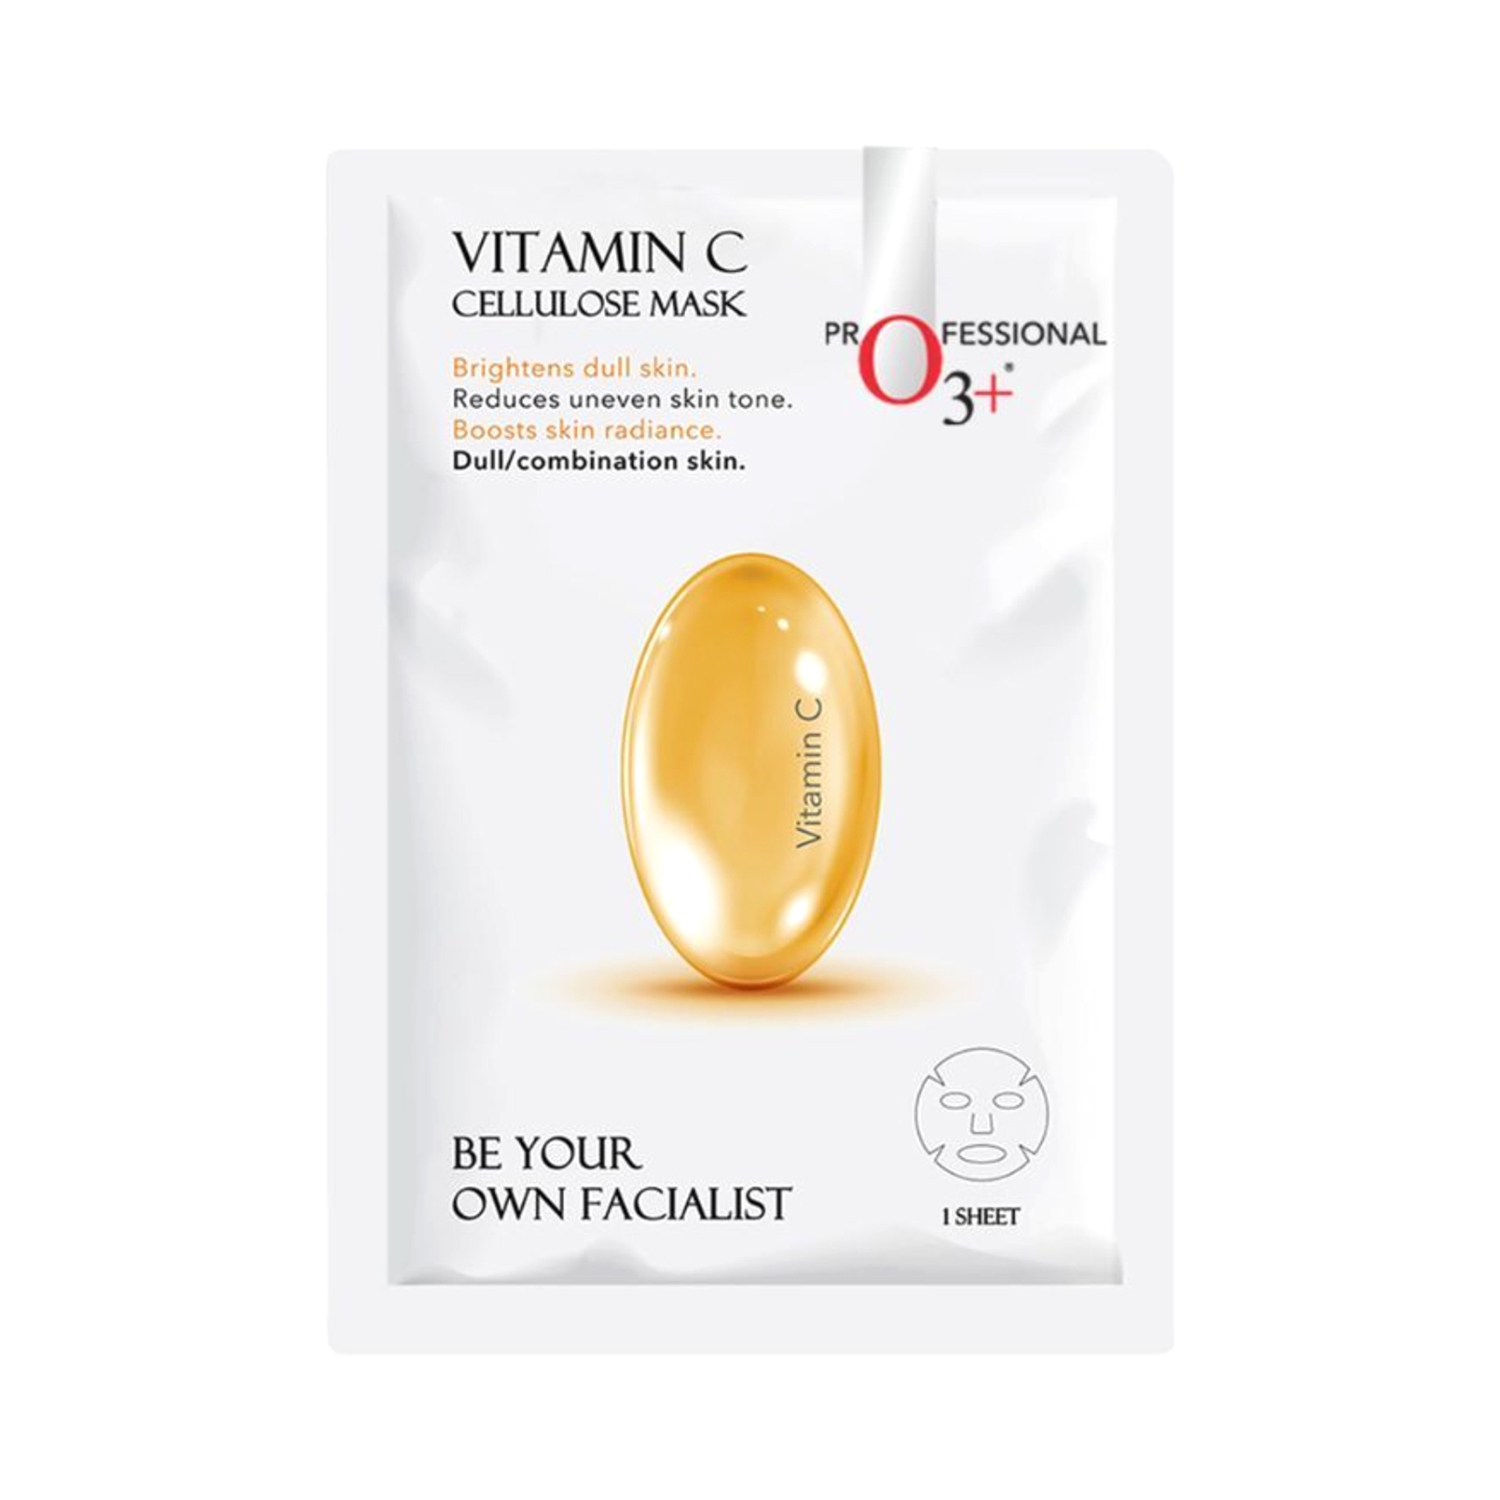 O3+ | O3+ Facialist Vitamin C Cellulose Mask (30g)